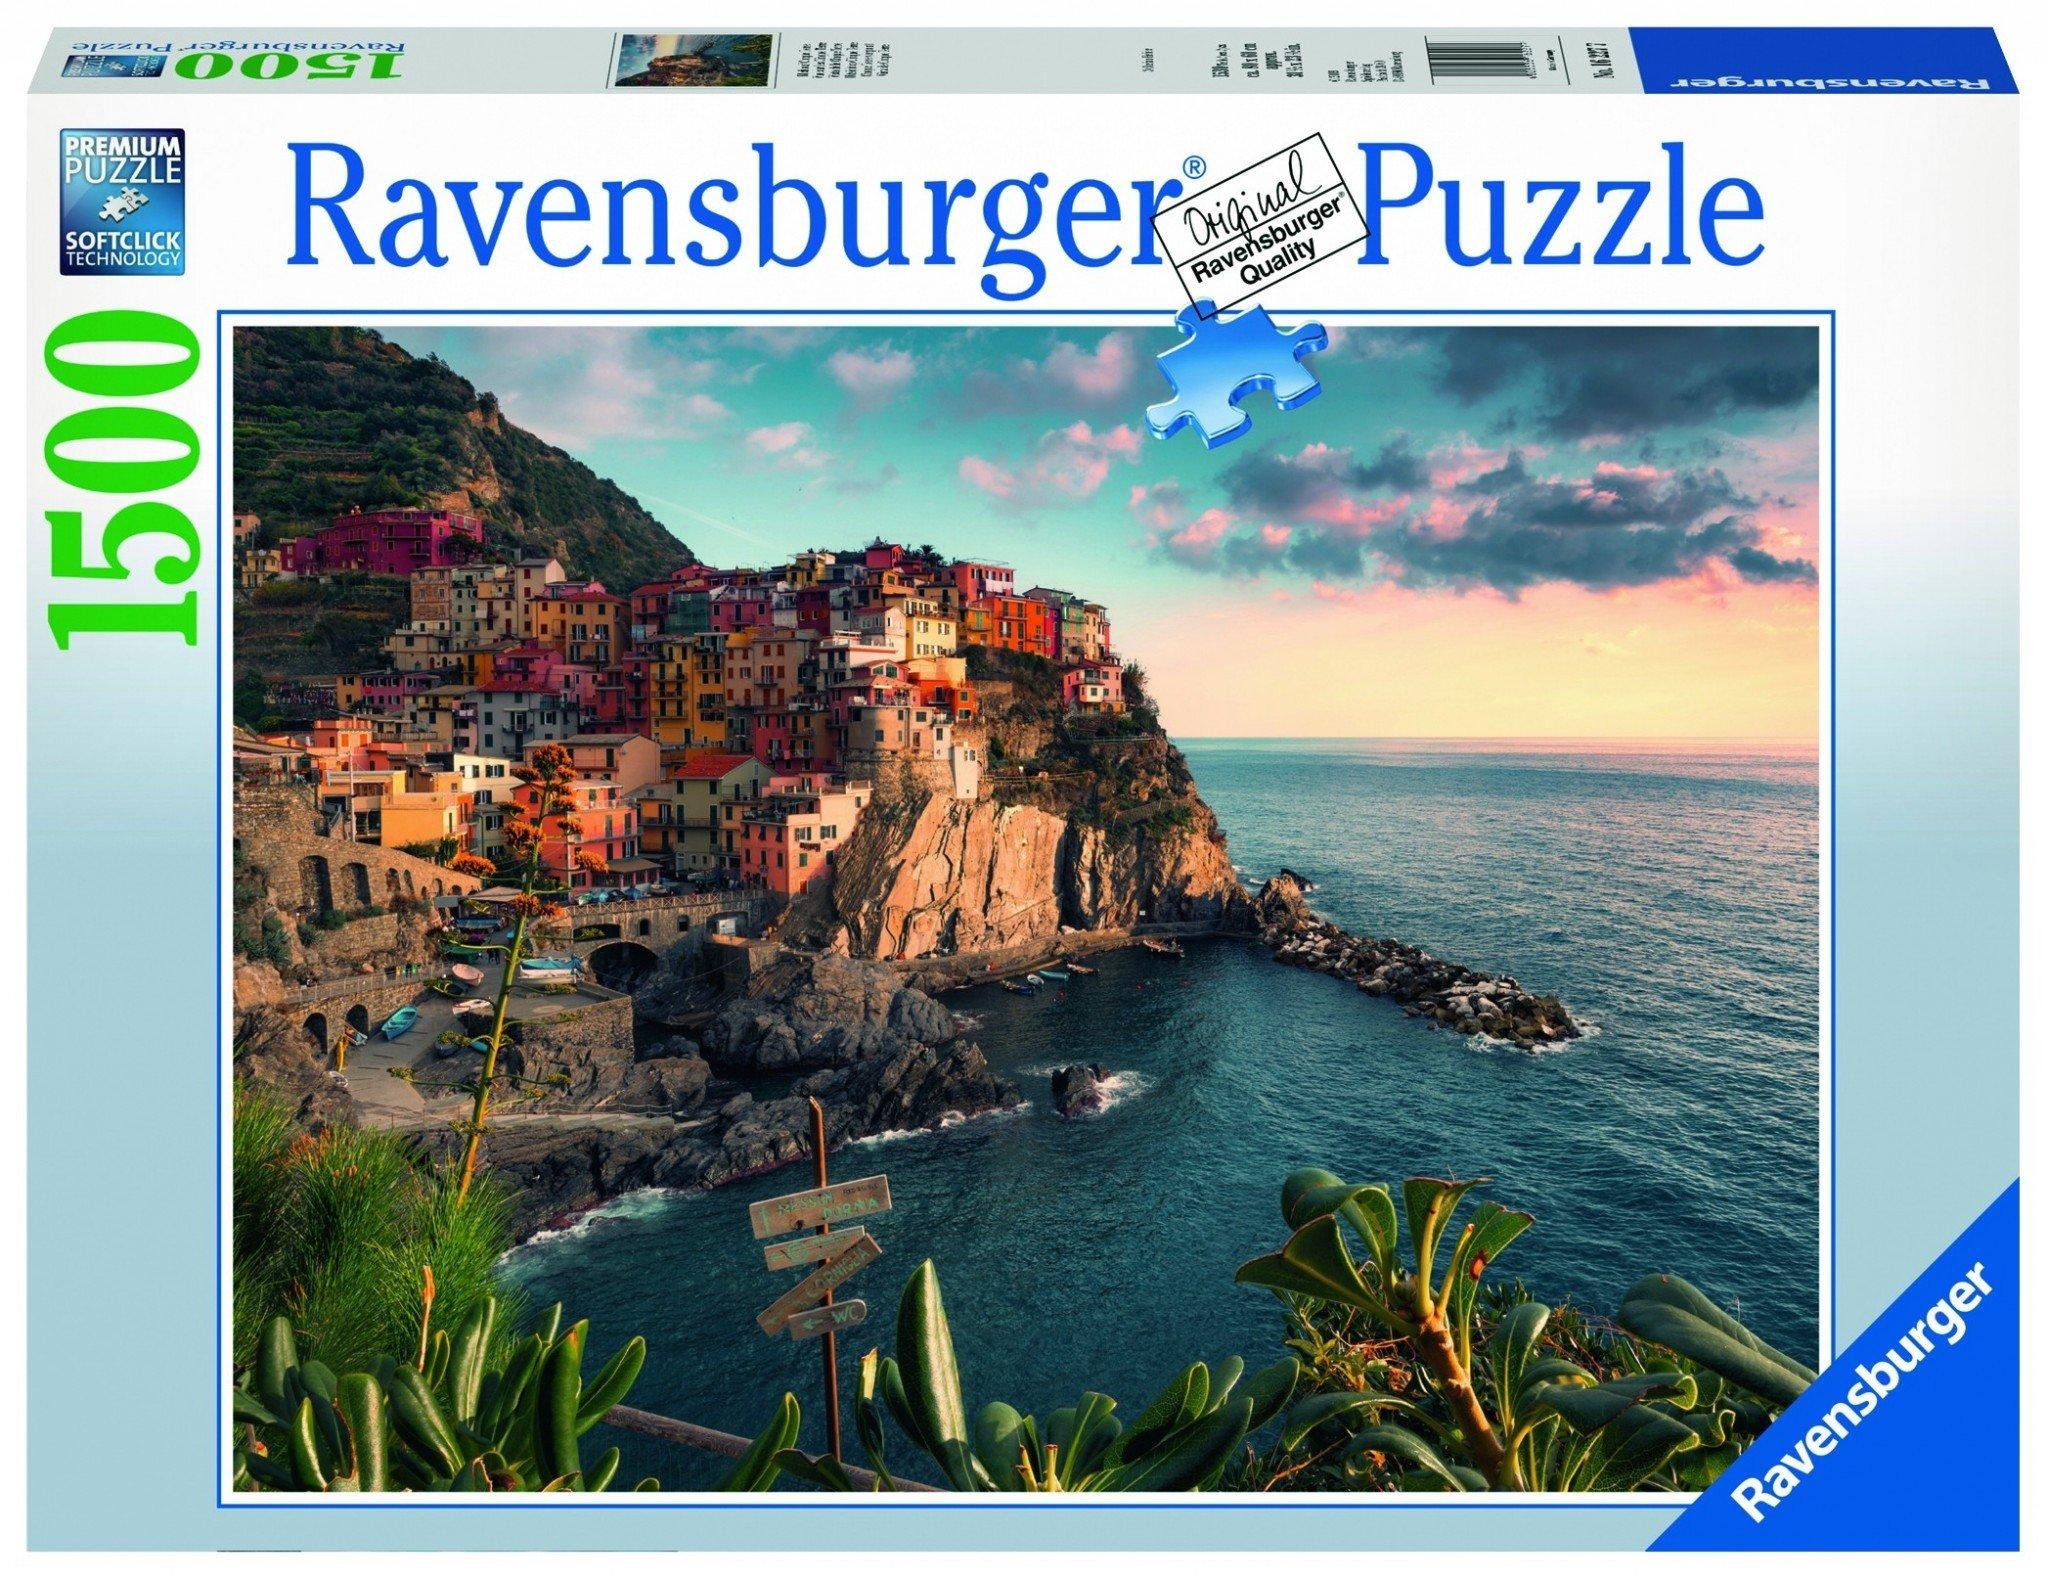 Ravensburger  Puzzle vista delle Cinque Terre, 1500 pezzi 